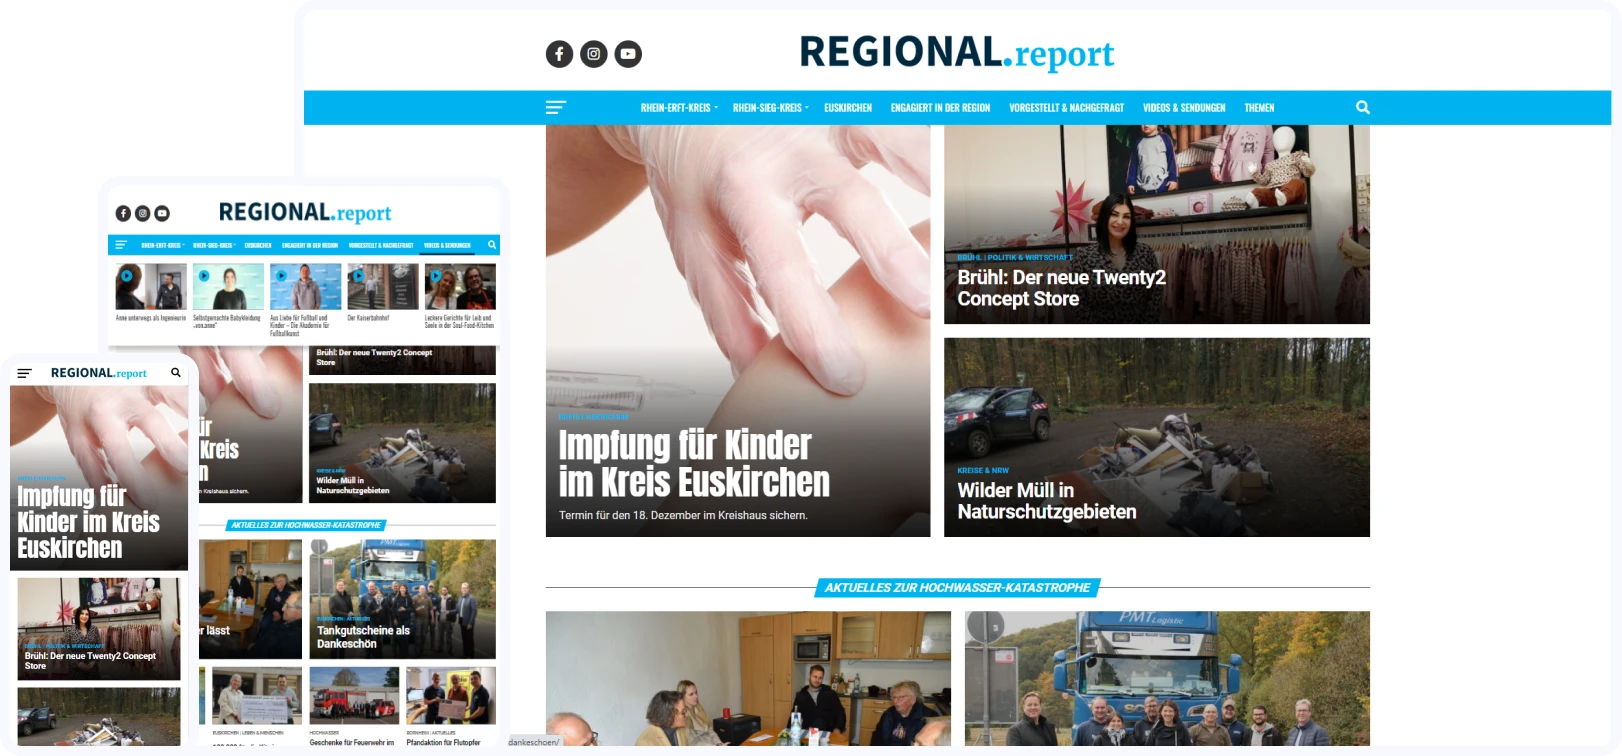 Regional report